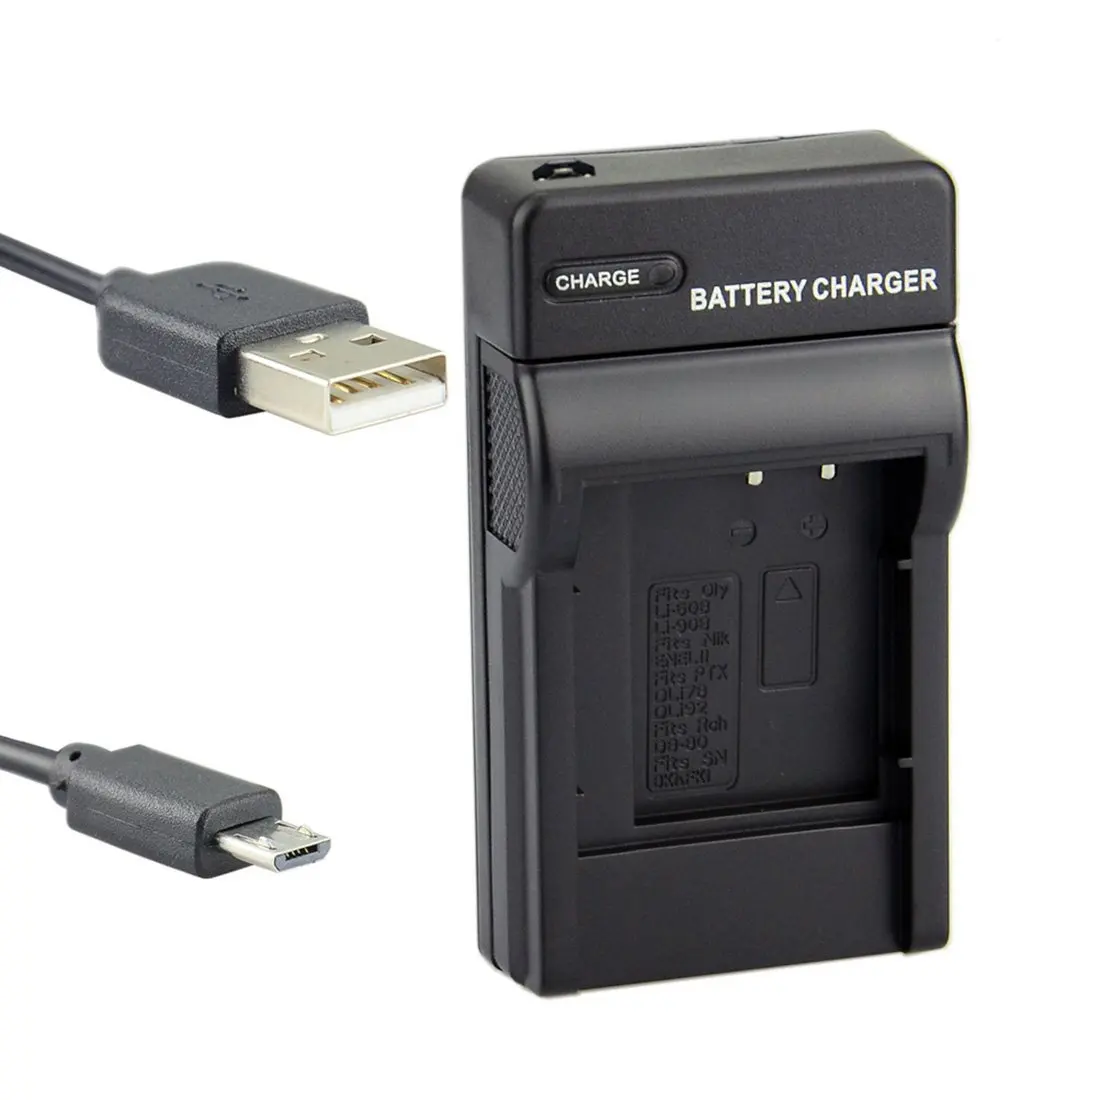 USB-Charger compatible with Olympus Li-50b Pentax D-Li92 Li-90b Sony NP-BK1 Ricoh DB-100 